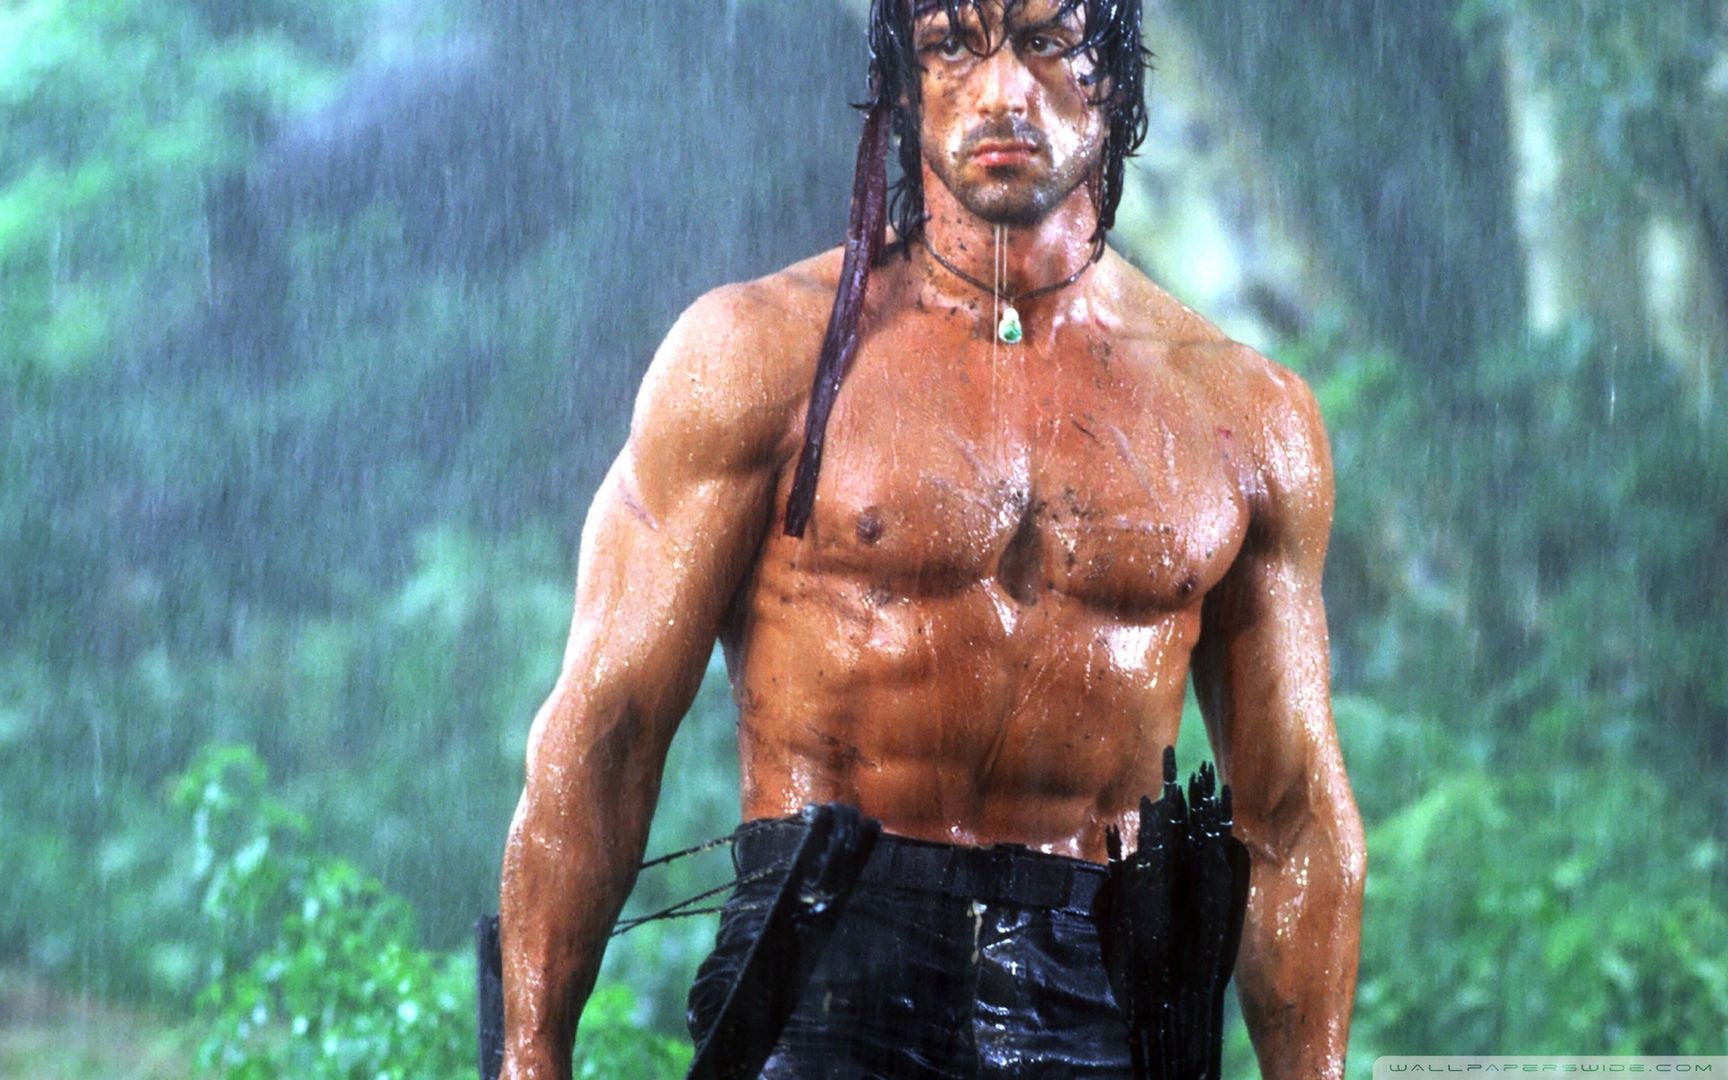 Kadr z filmu "Rambo II"